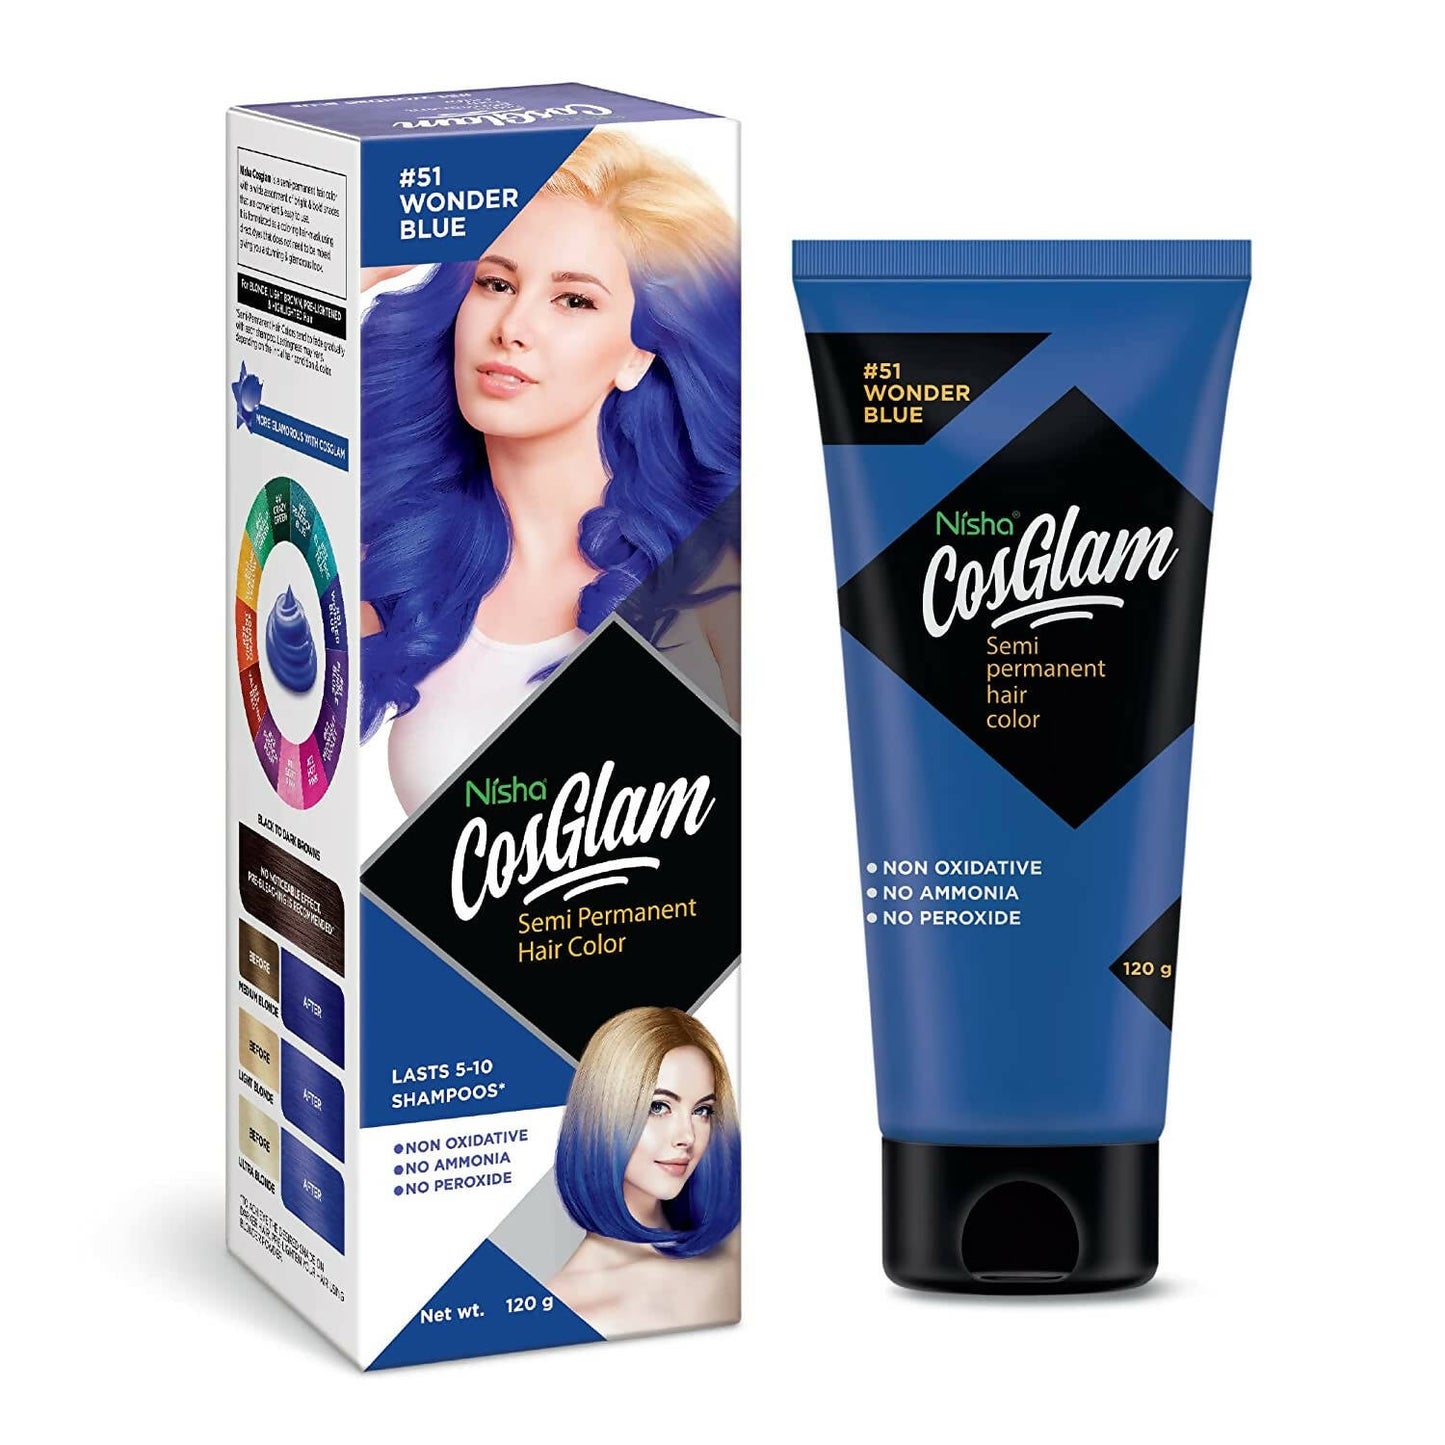 Nisha Cosglam Semi Permanent Hair Color 51 Wonder Blue - BUDNE